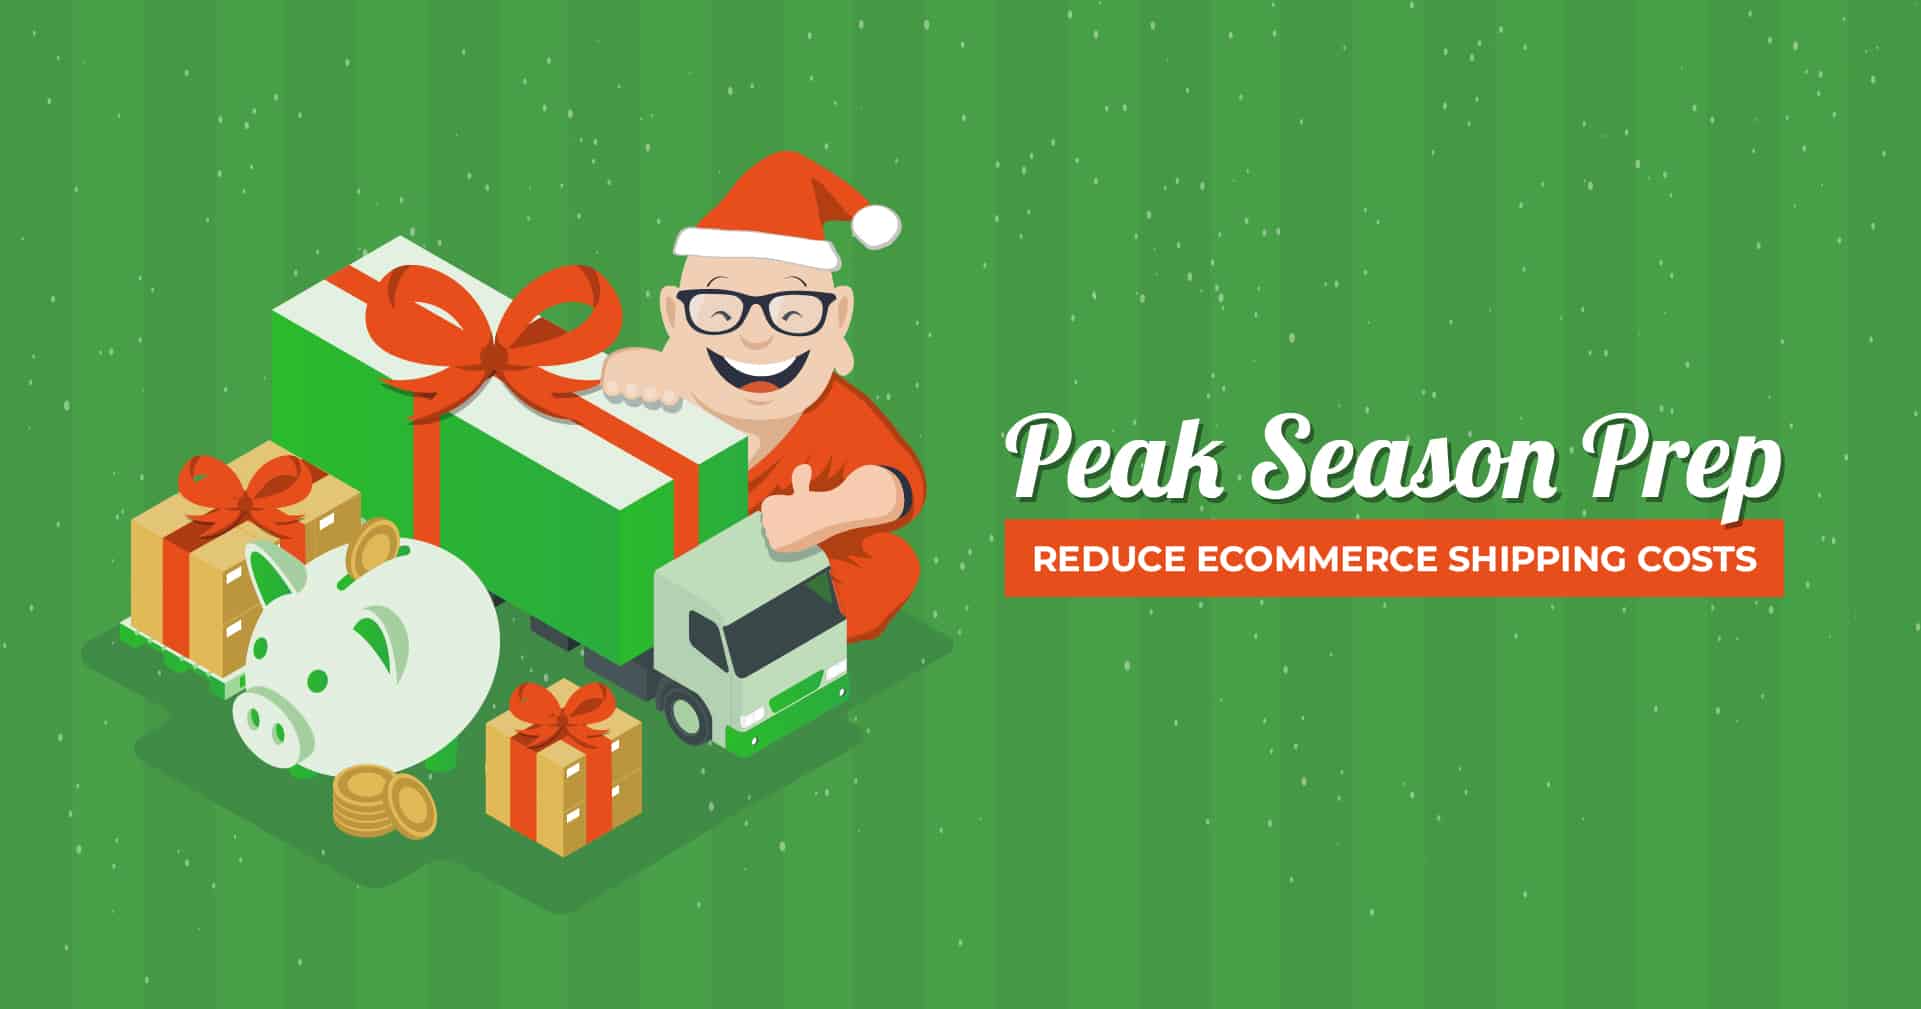 Peak Season Prep: Reduce Ecommerce Shipping Costs